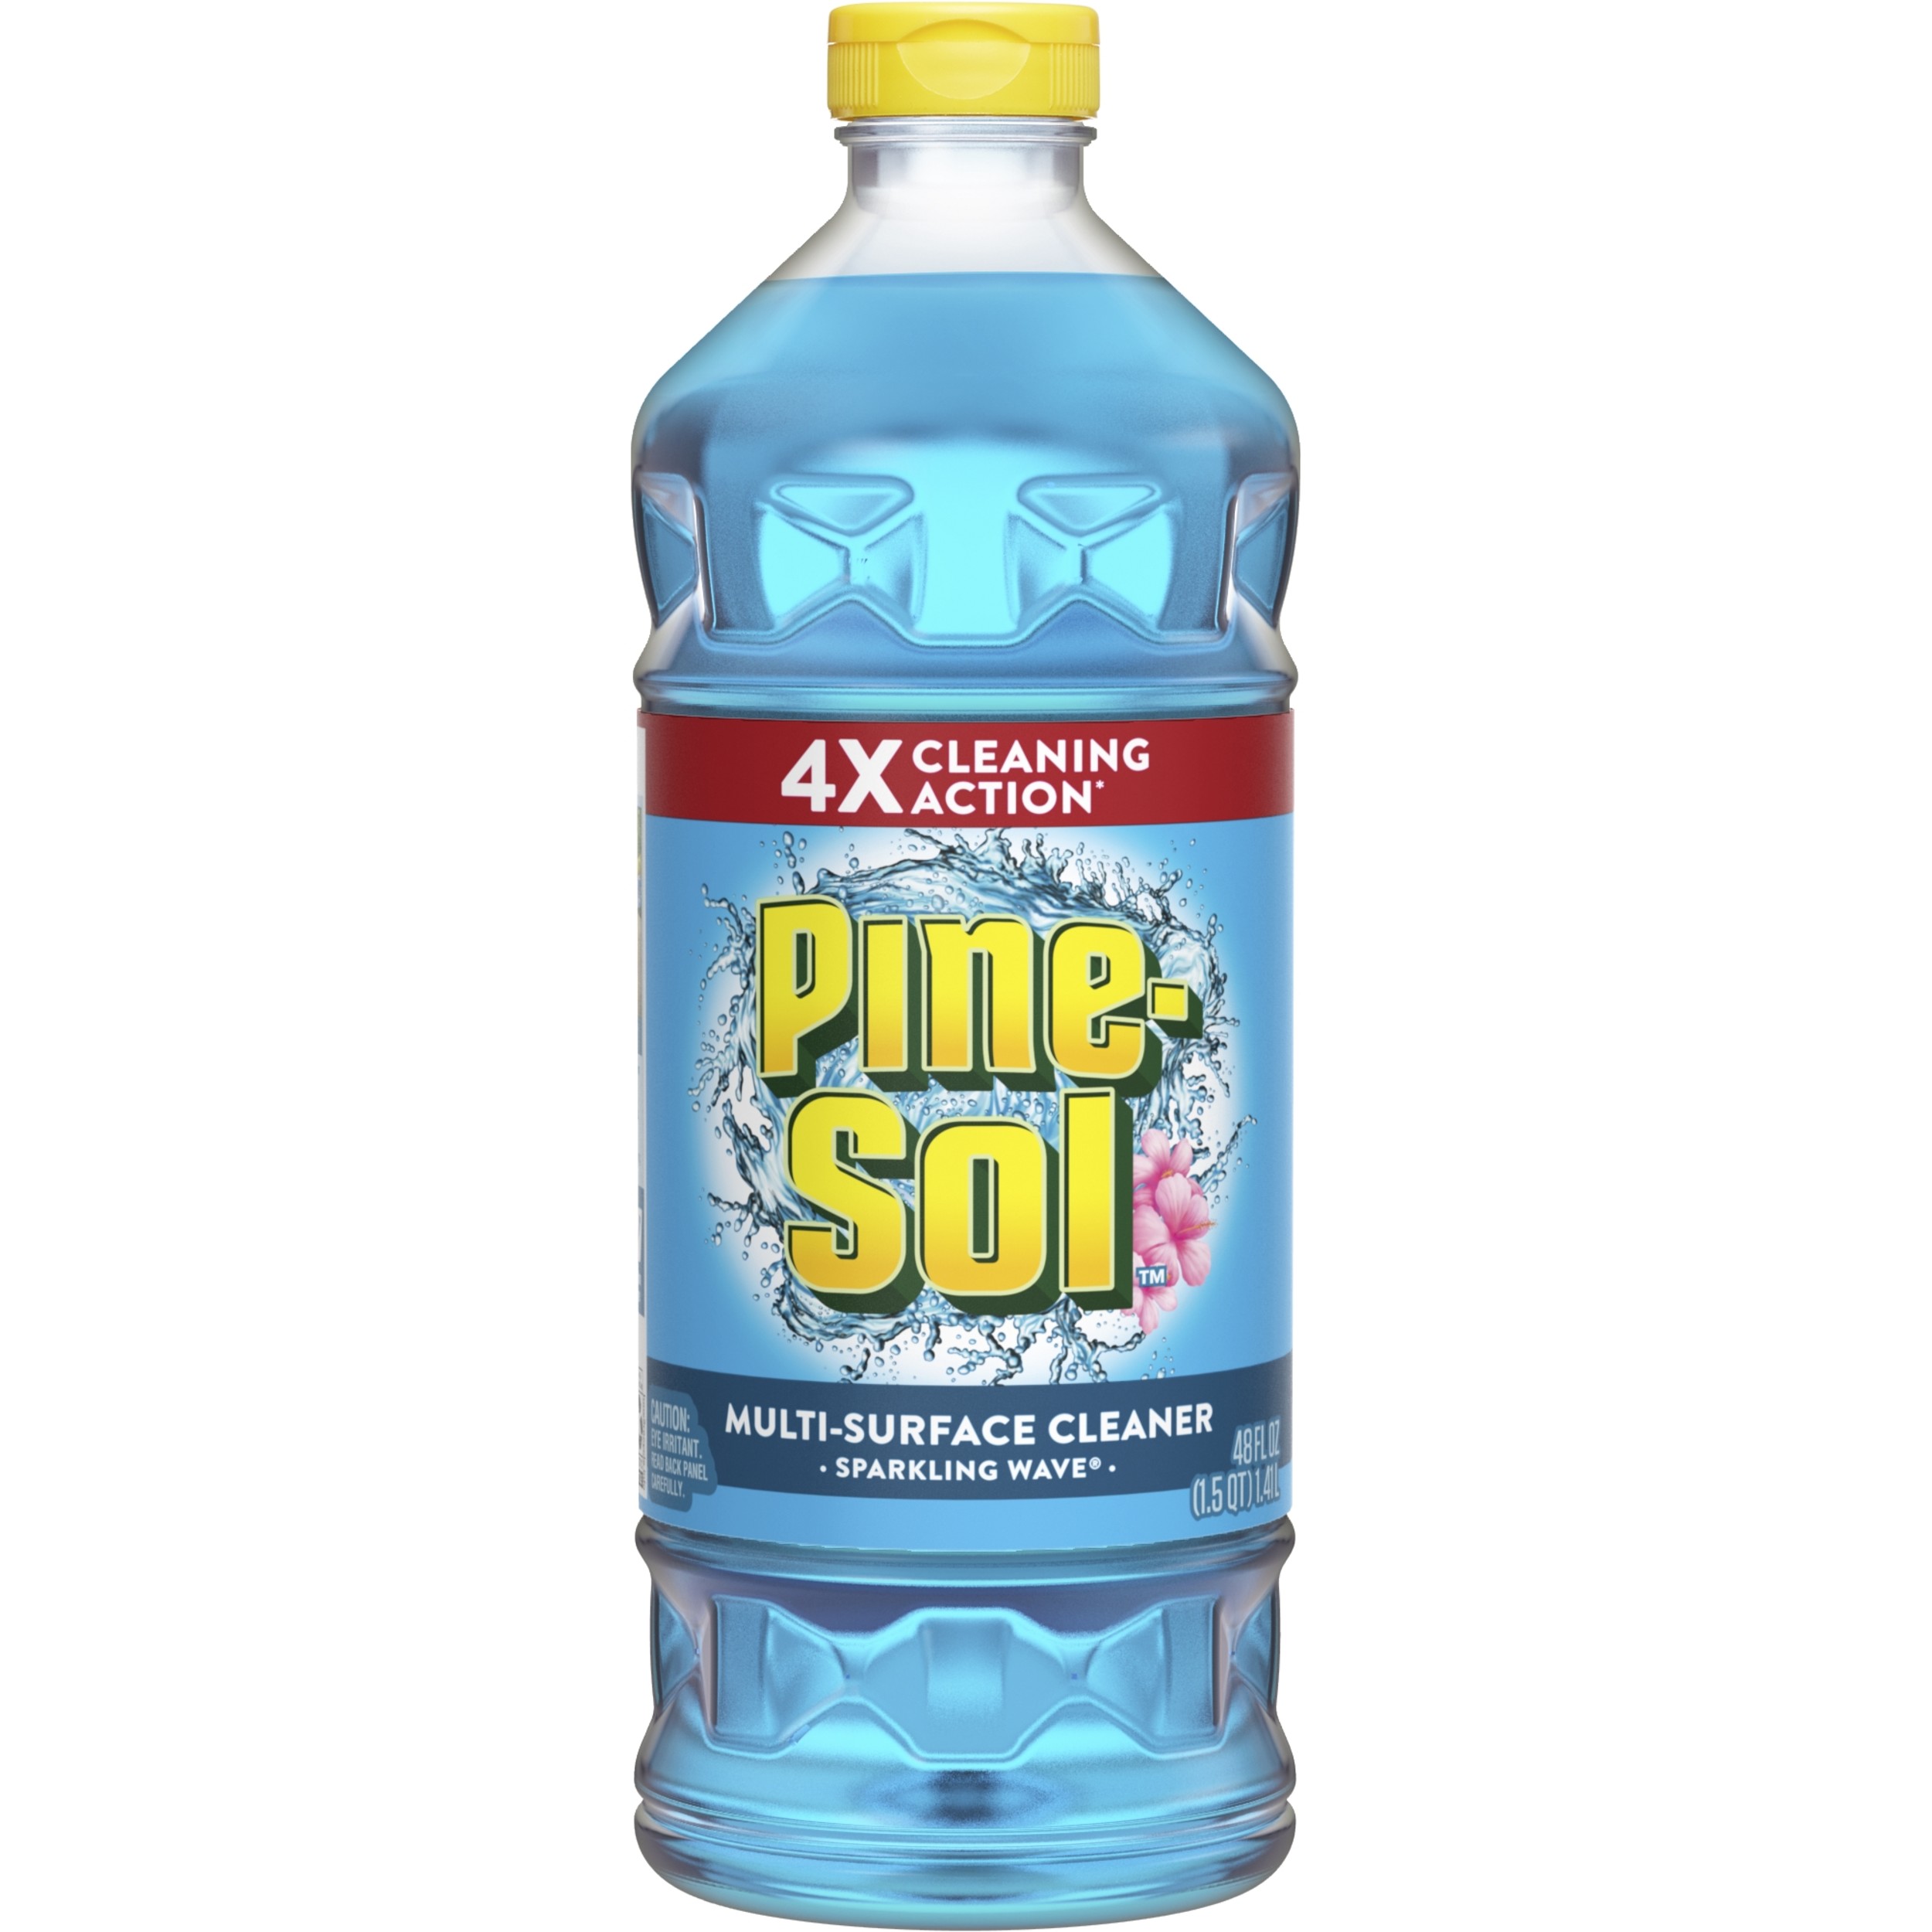 Pine-Sol All Purpose Cleaner, Sparkling Wave, 48 oz Bottle - image 1 of 10